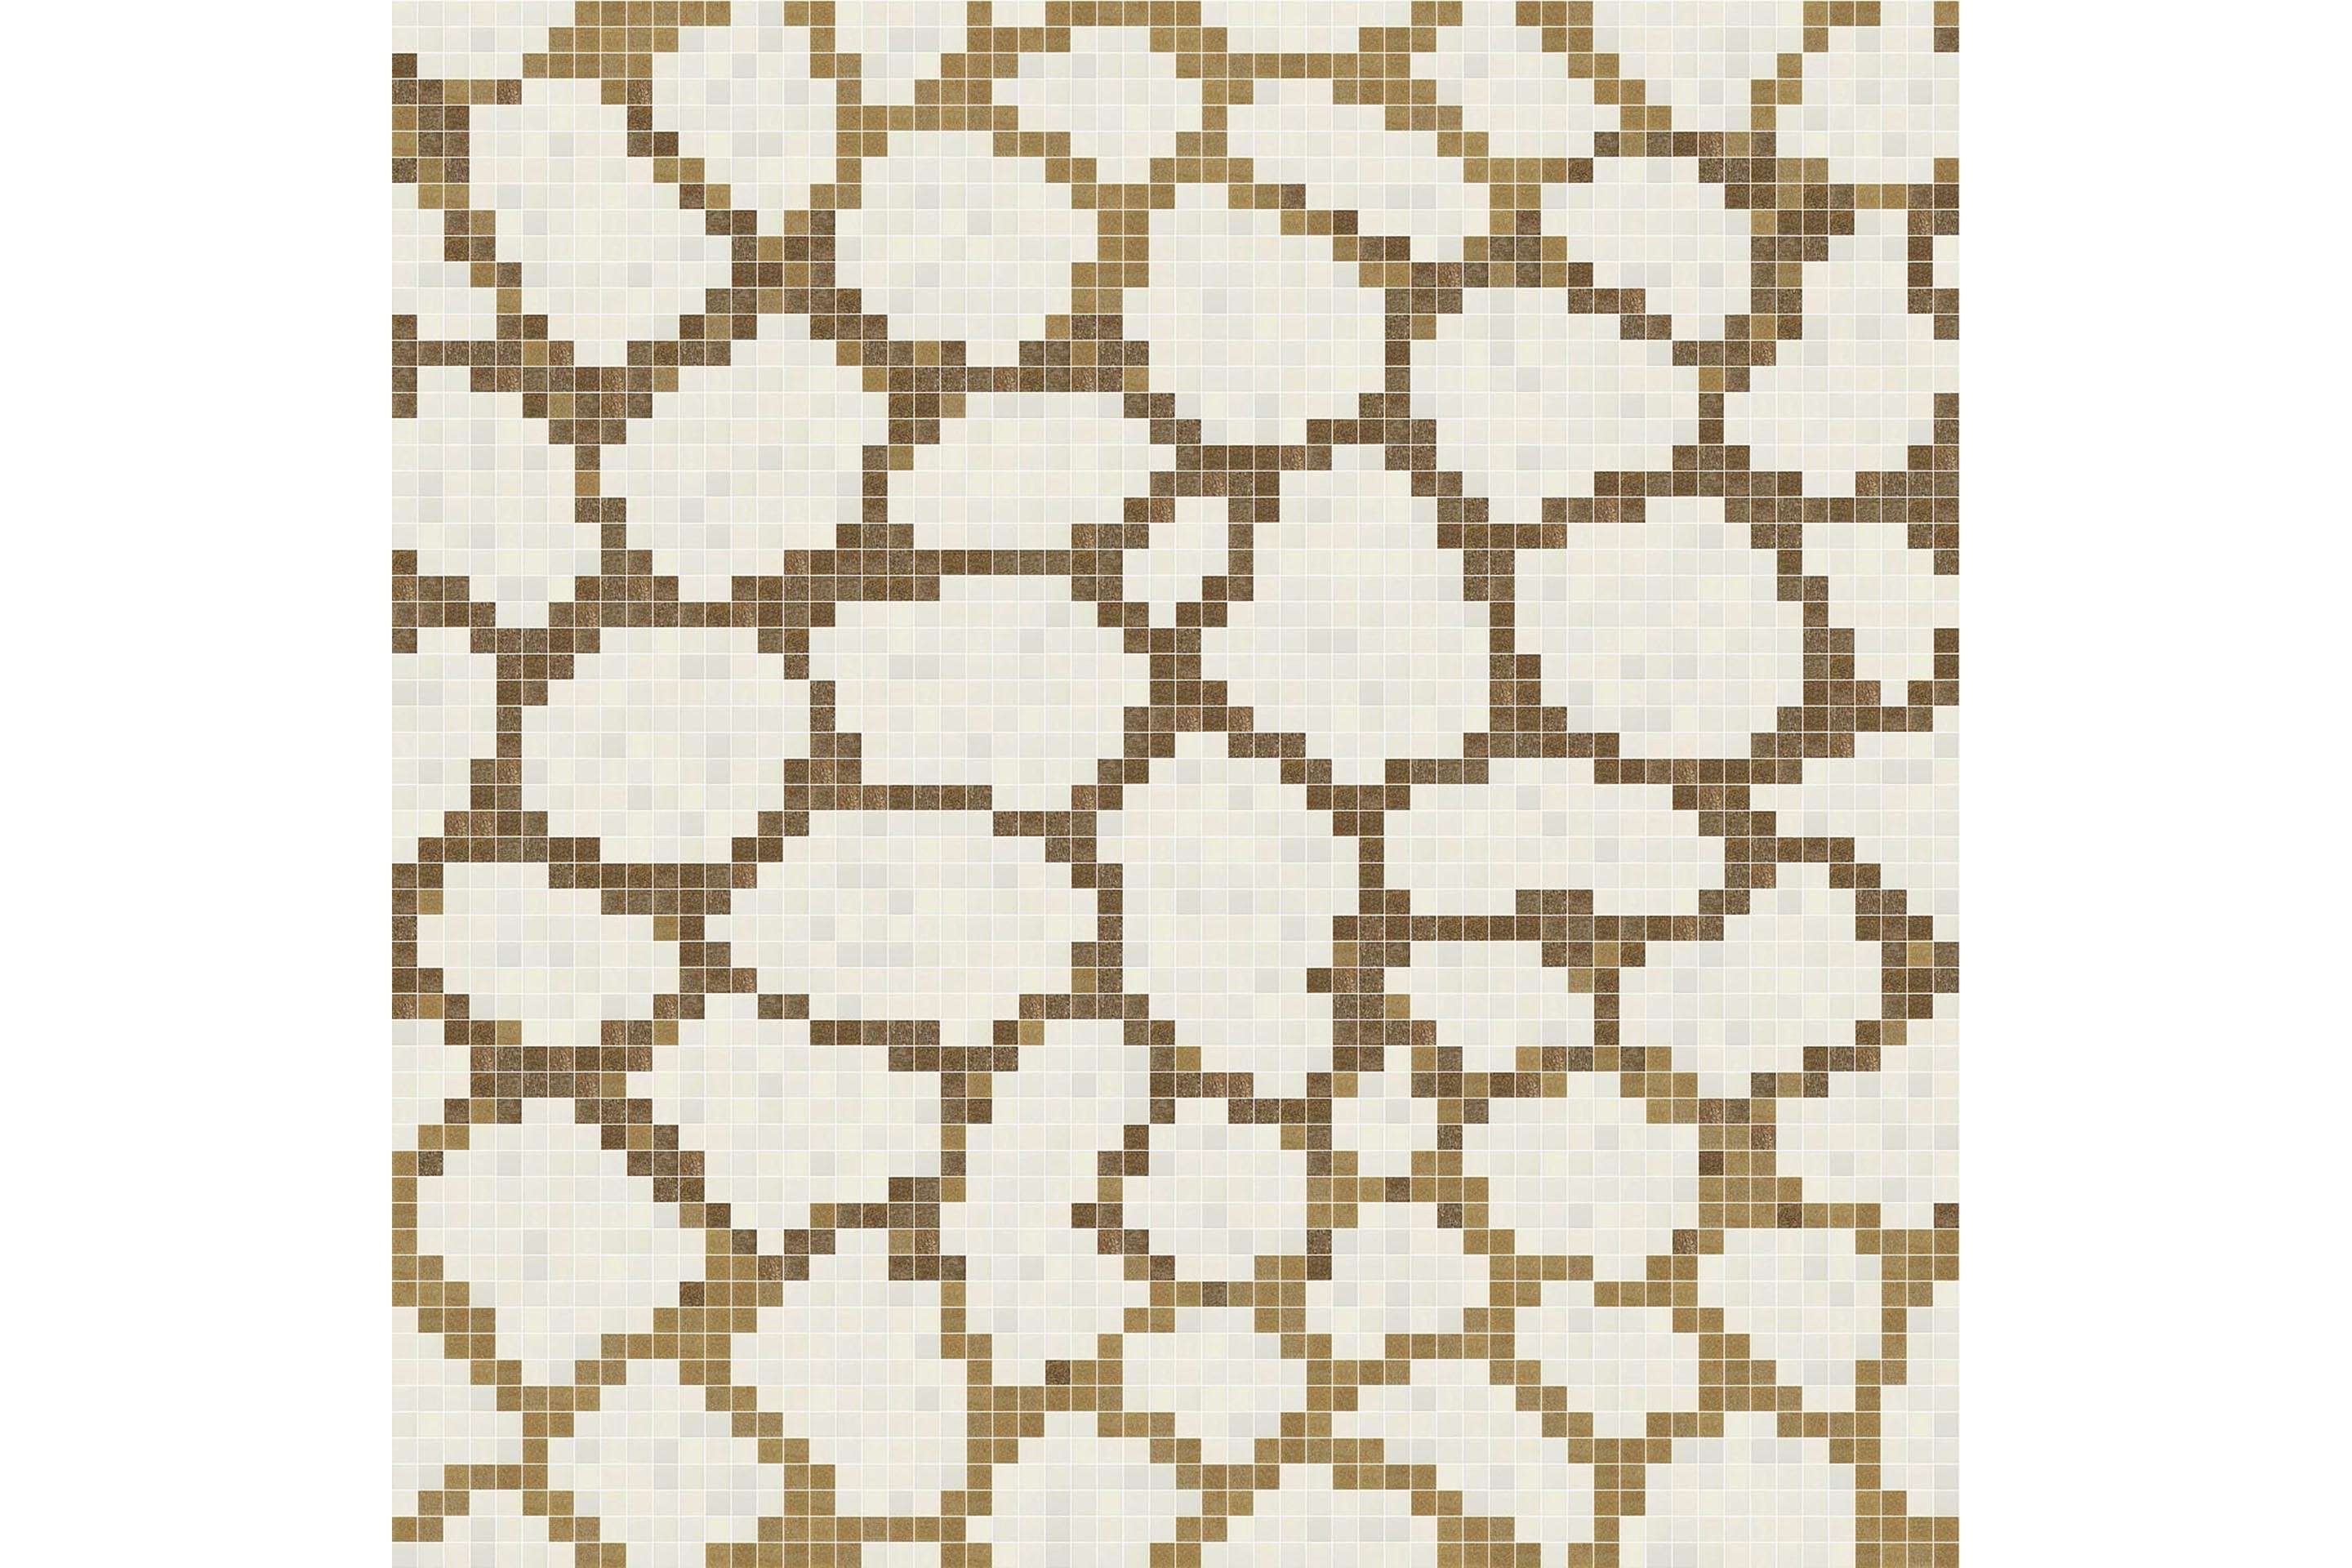 Мозаика Trend Wallpaper (Волпейпер) Grand 2